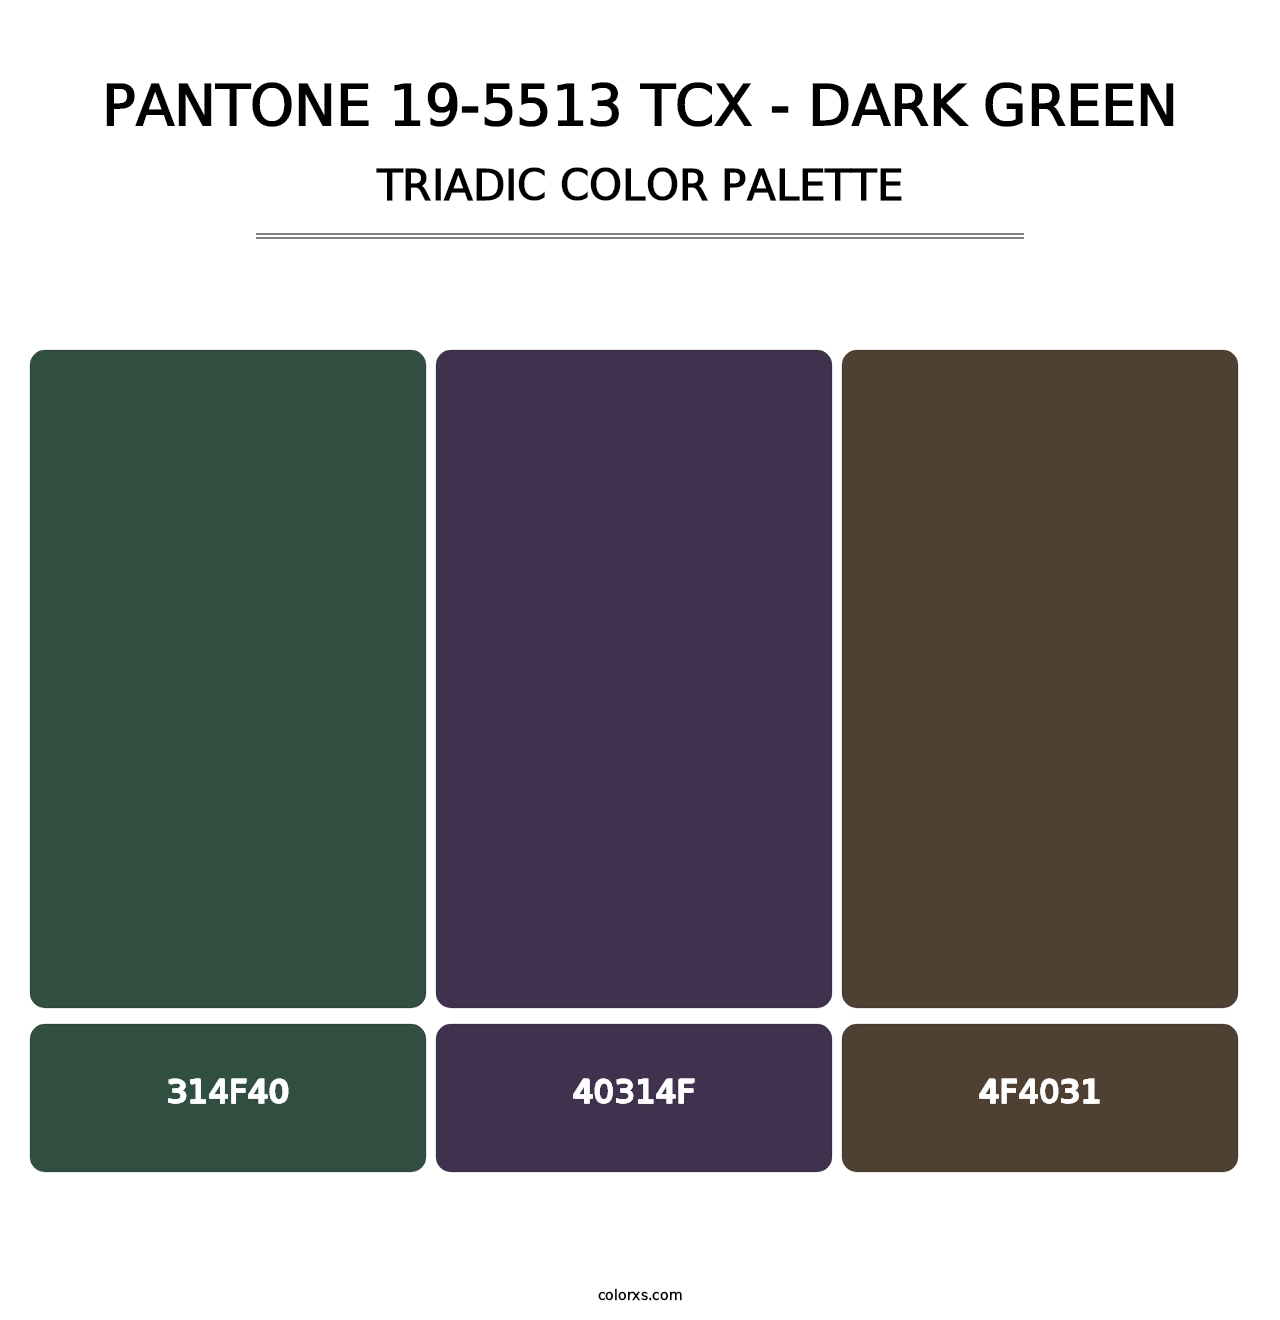 PANTONE 19-5513 TCX - Dark Green - Triadic Color Palette